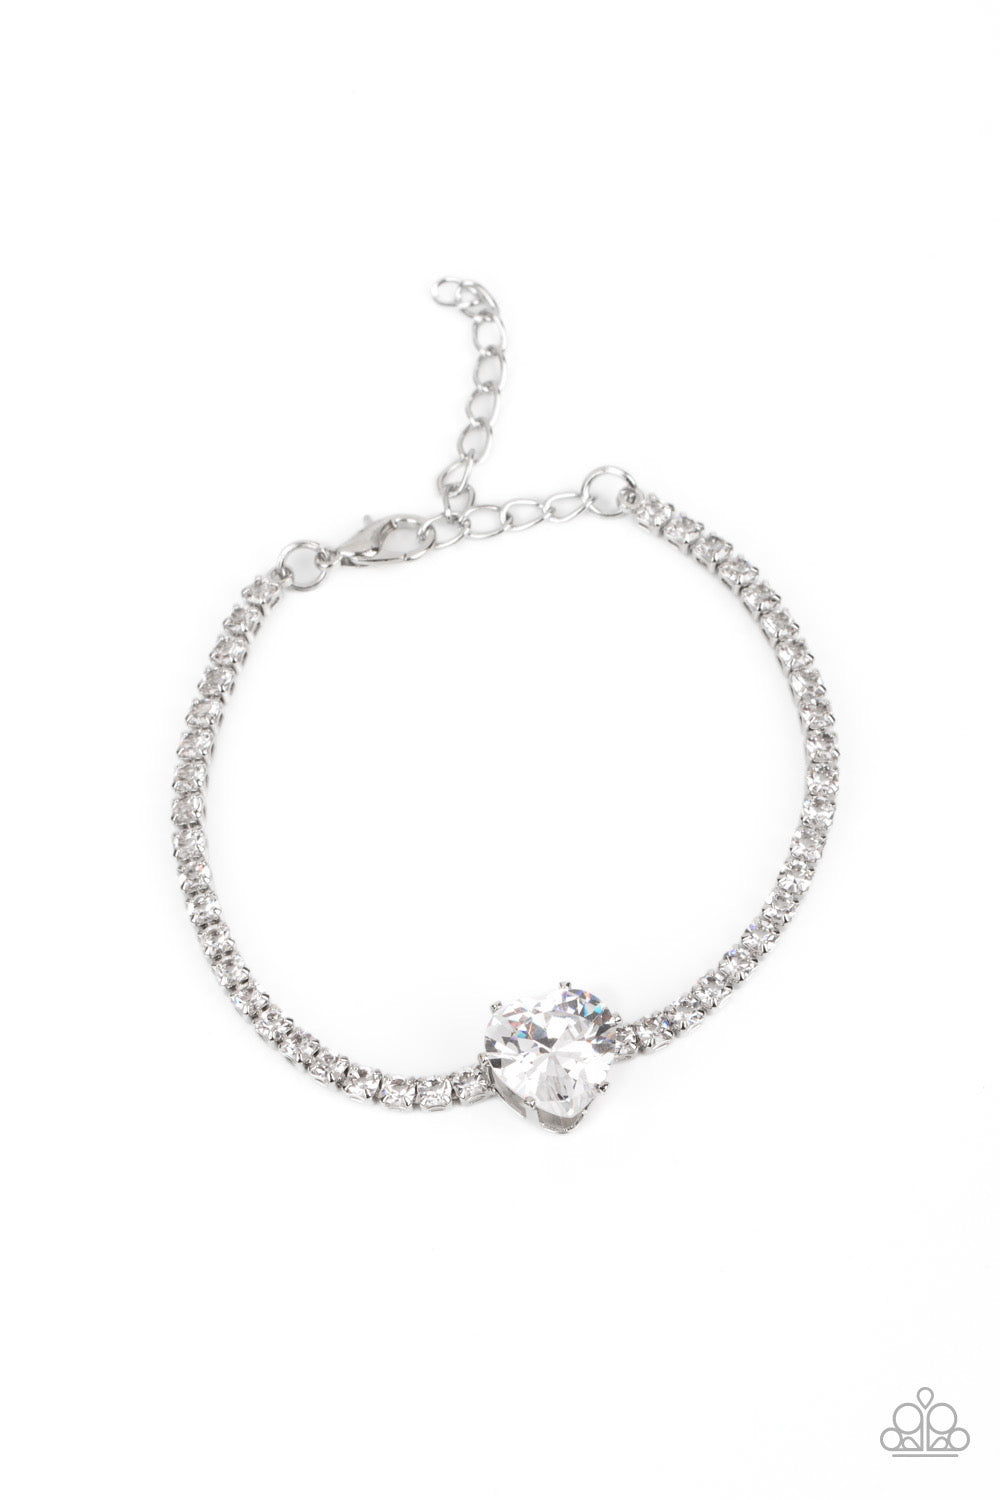 Paparazzi 2 Piece Set: Flirty Fiancé - White Necklace & Bedazzled Beauty - White Bracelet